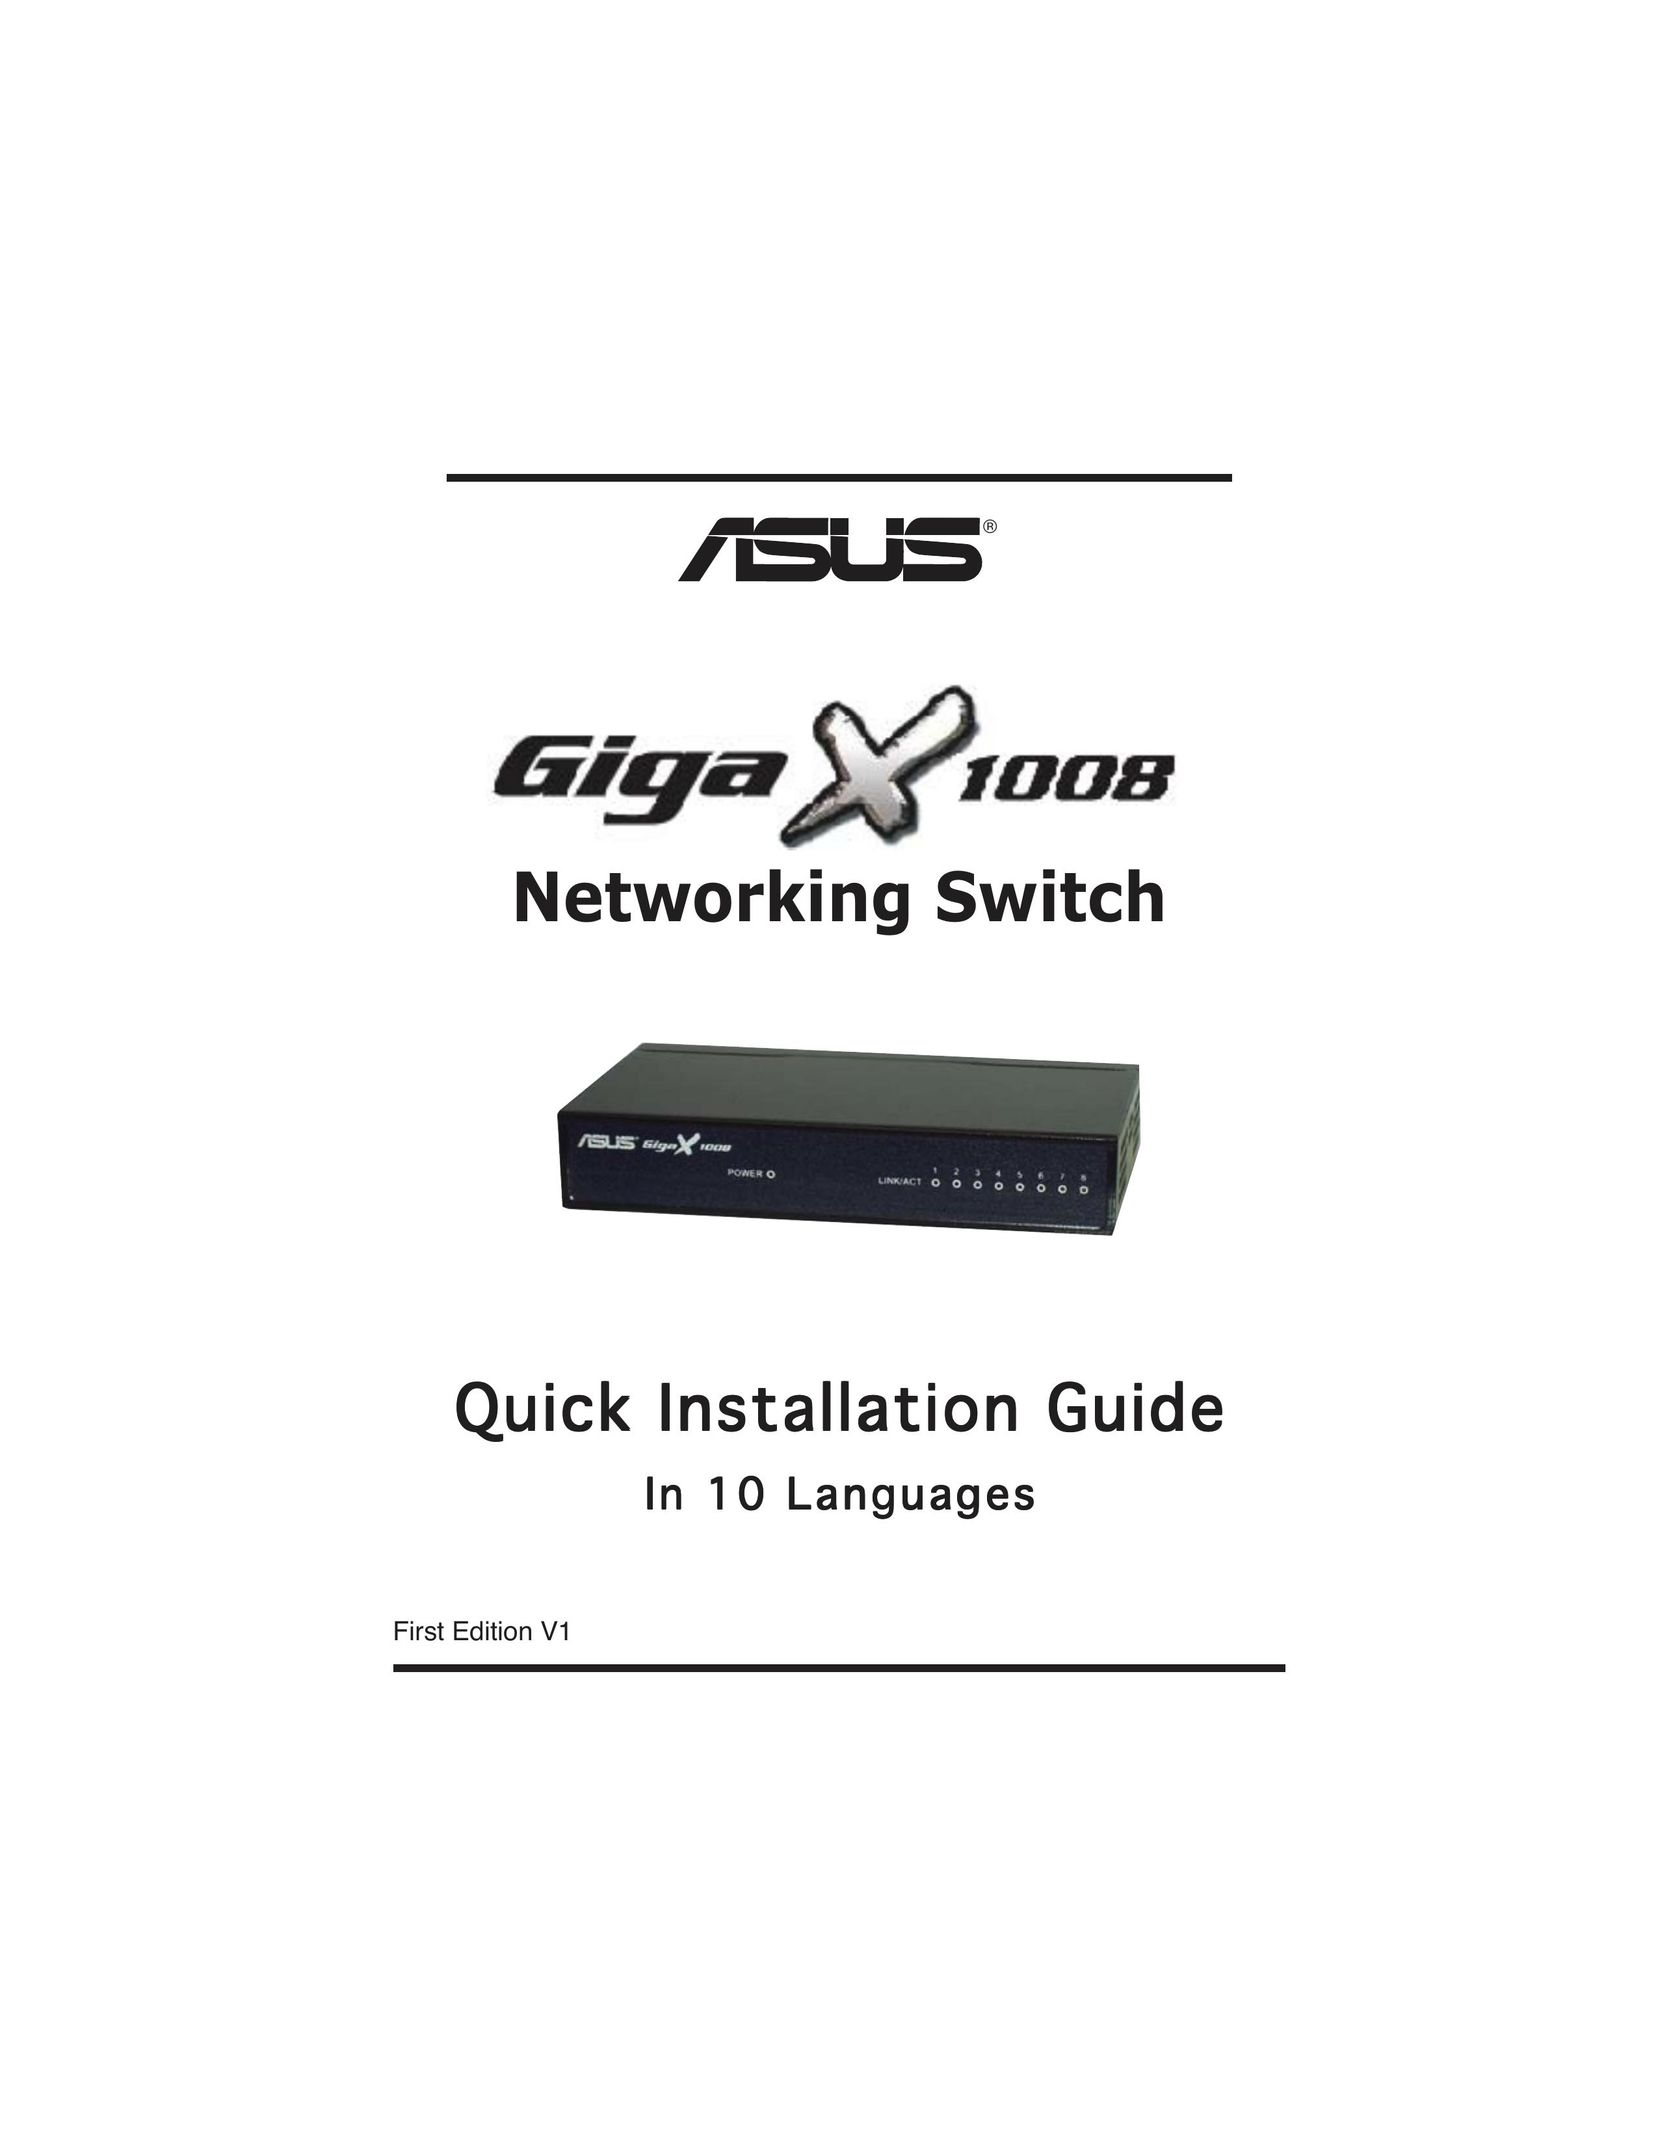 Asus GigaX1008 Switch User Manual